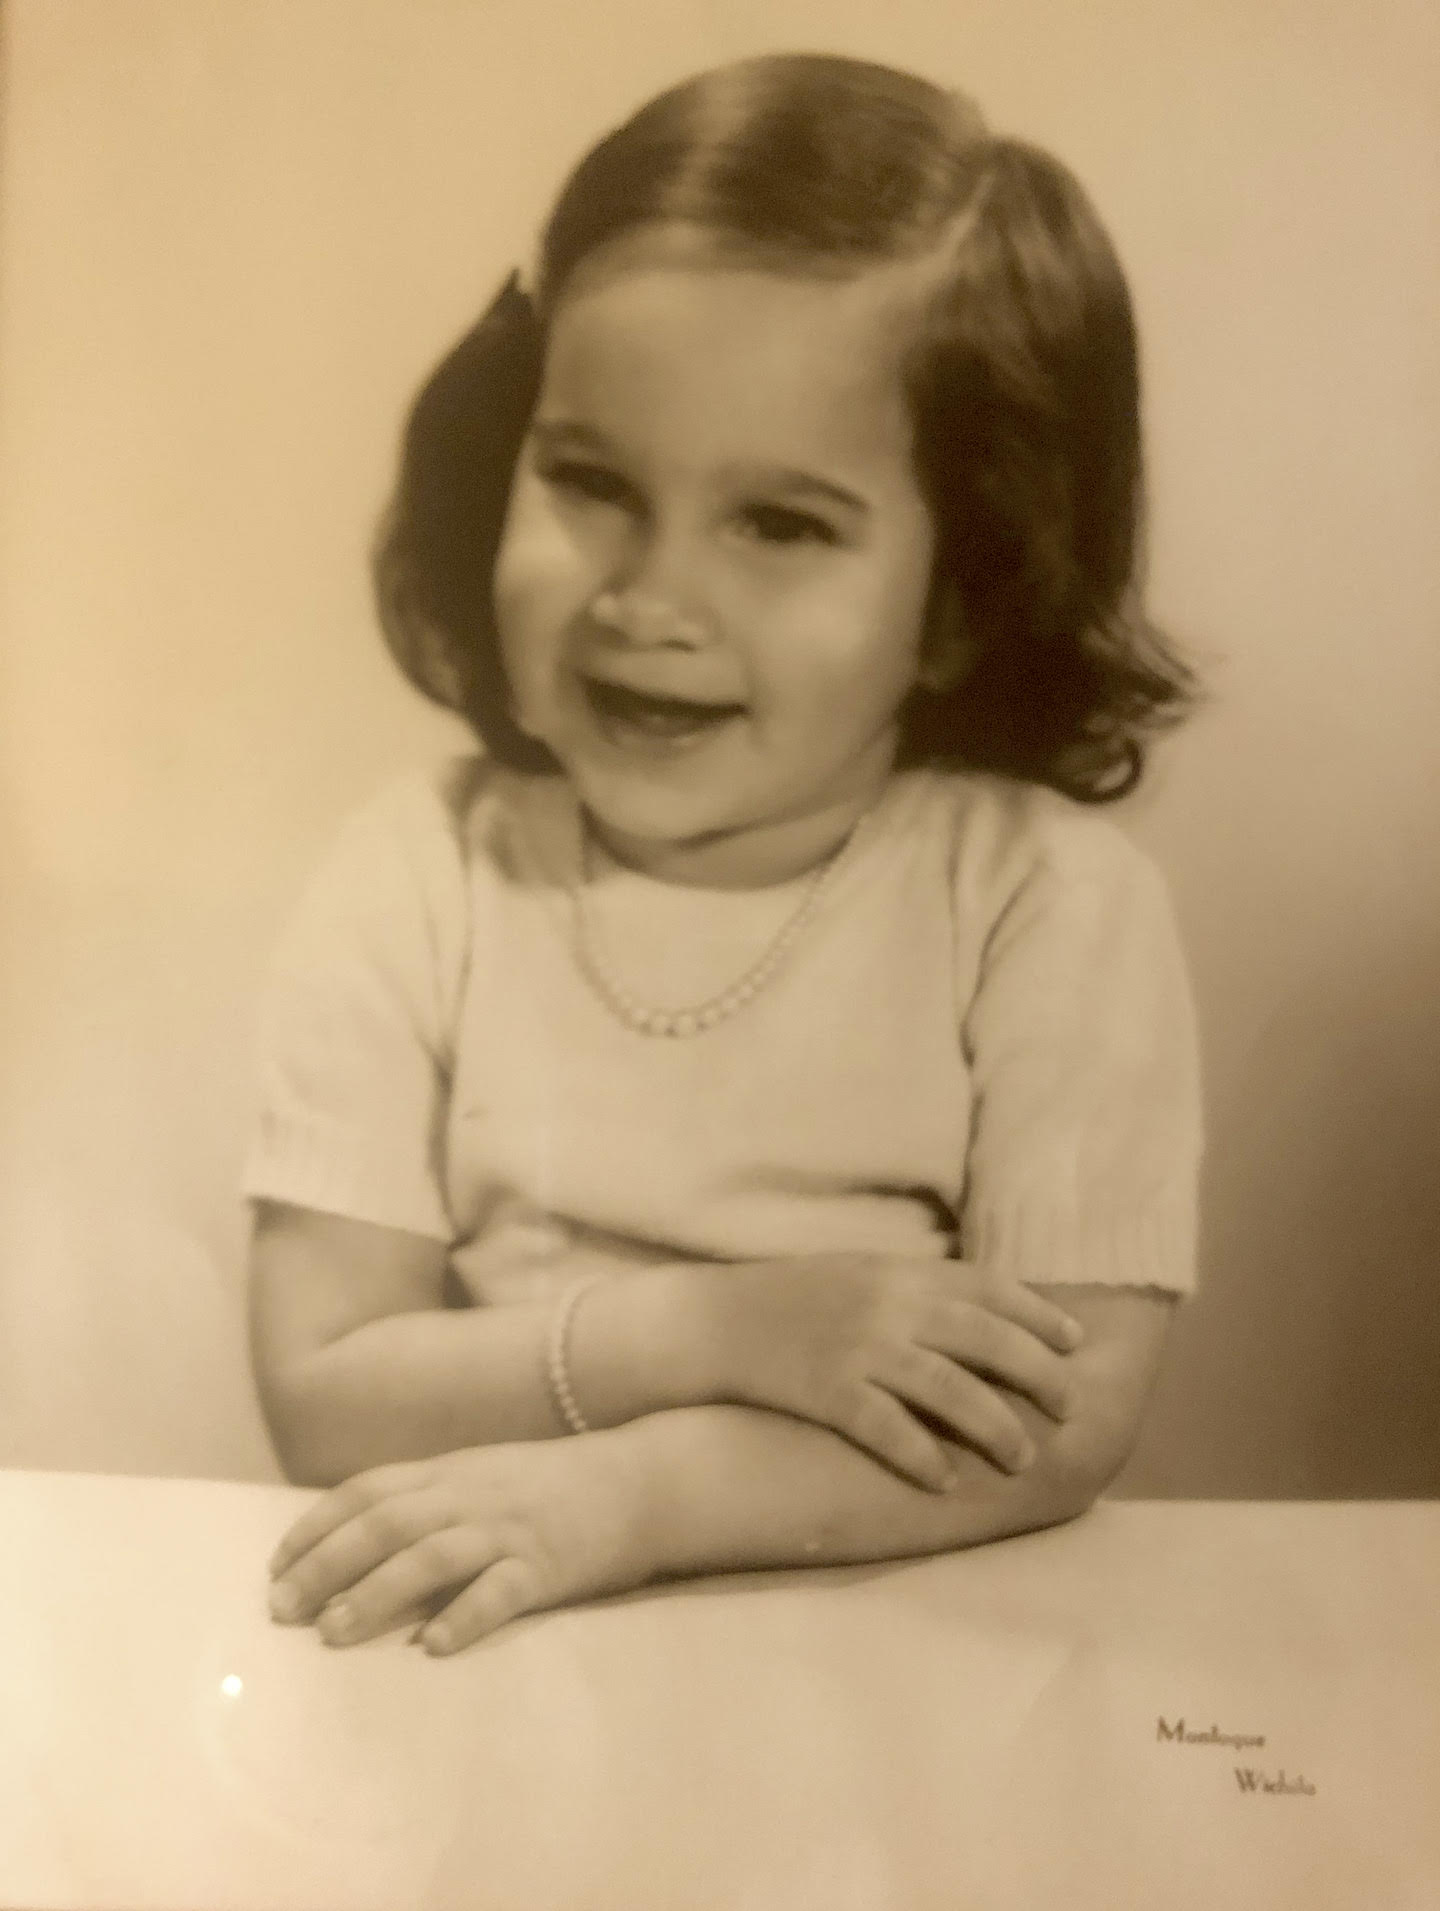 Cheryl Qamar at age 2. She says, “notice the pearls!” Photo courtesy of Cheryl Qamar.